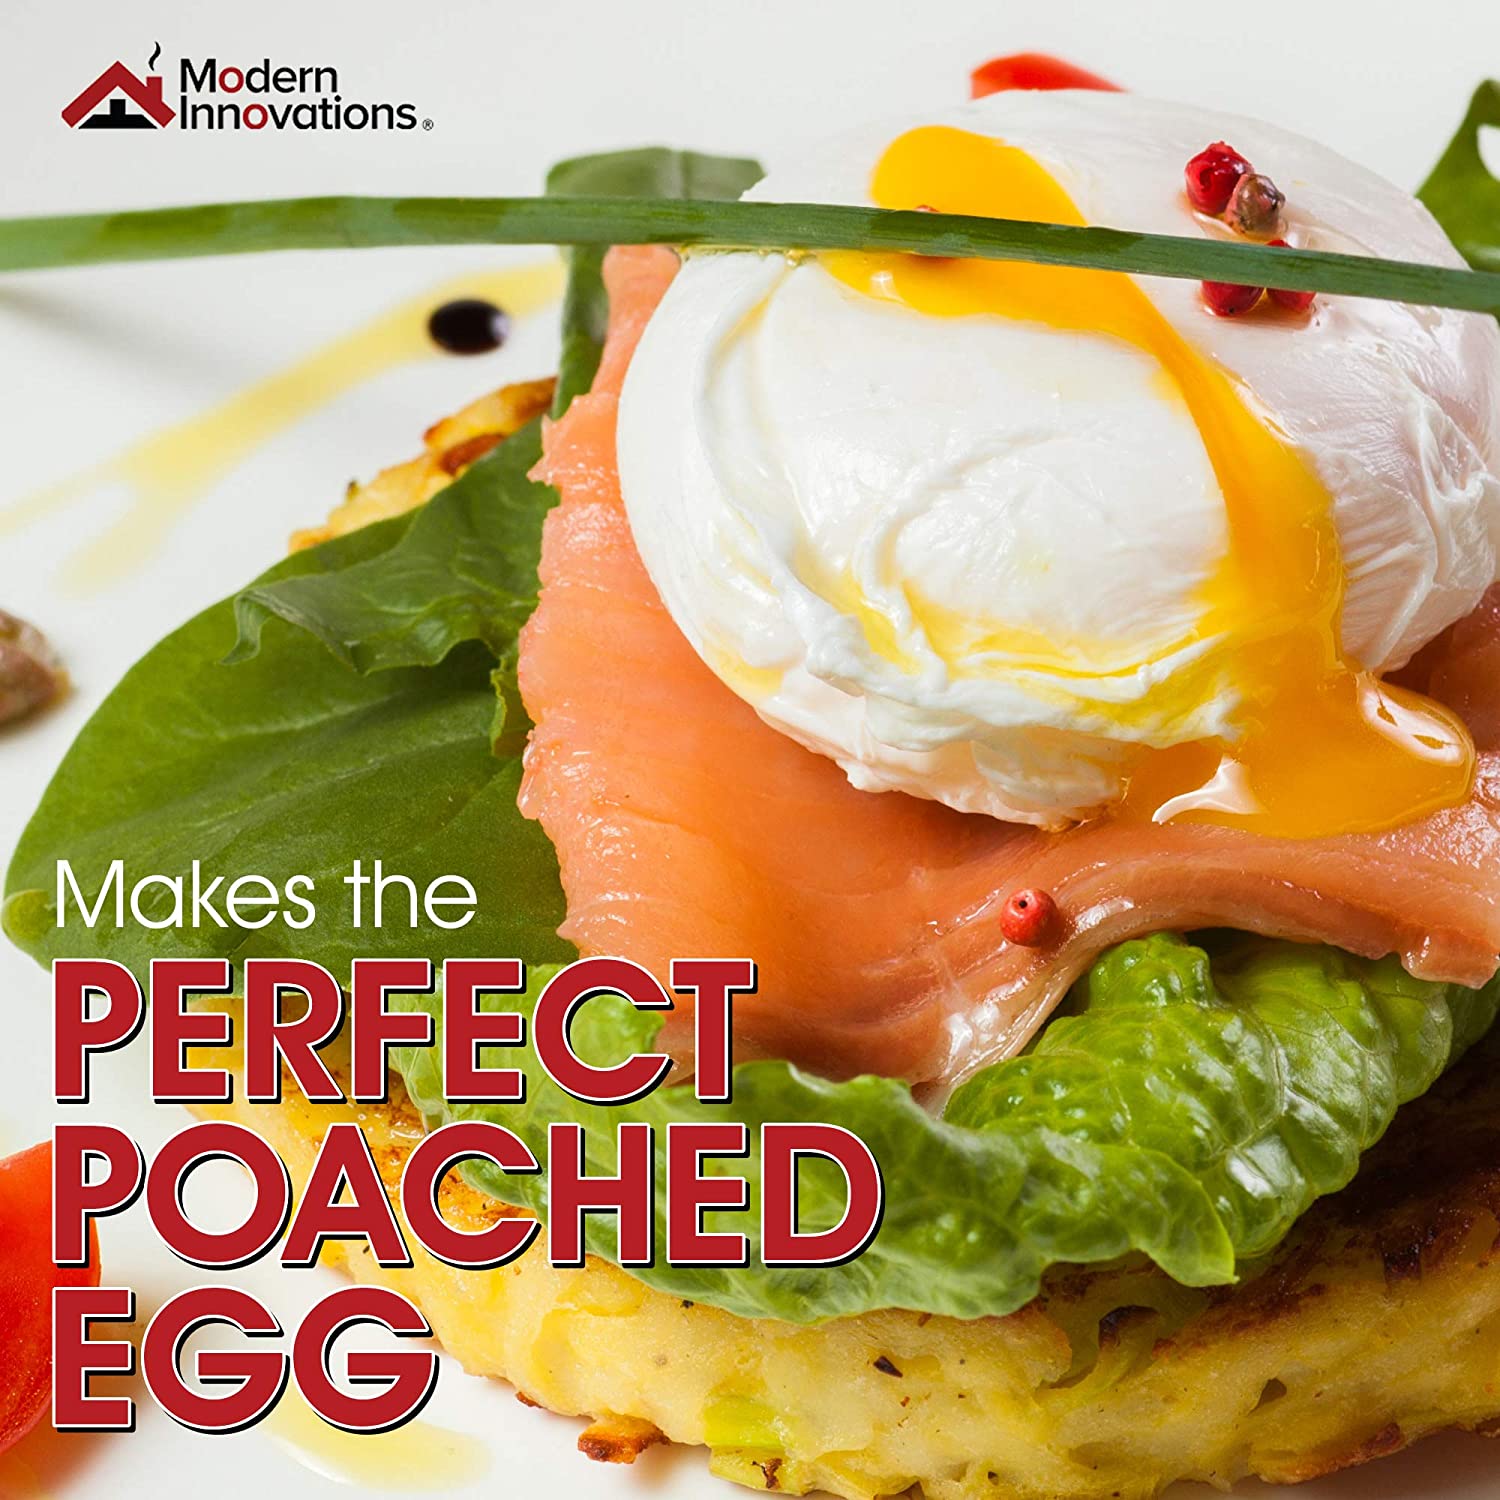 Eggssentials Poached Egg Maker - Nonstick 6 Egg Poaching Cups - Stainless Steel Egg Poacher Pan FDA Certified Food Grade Safe PFOA Free with Bonus